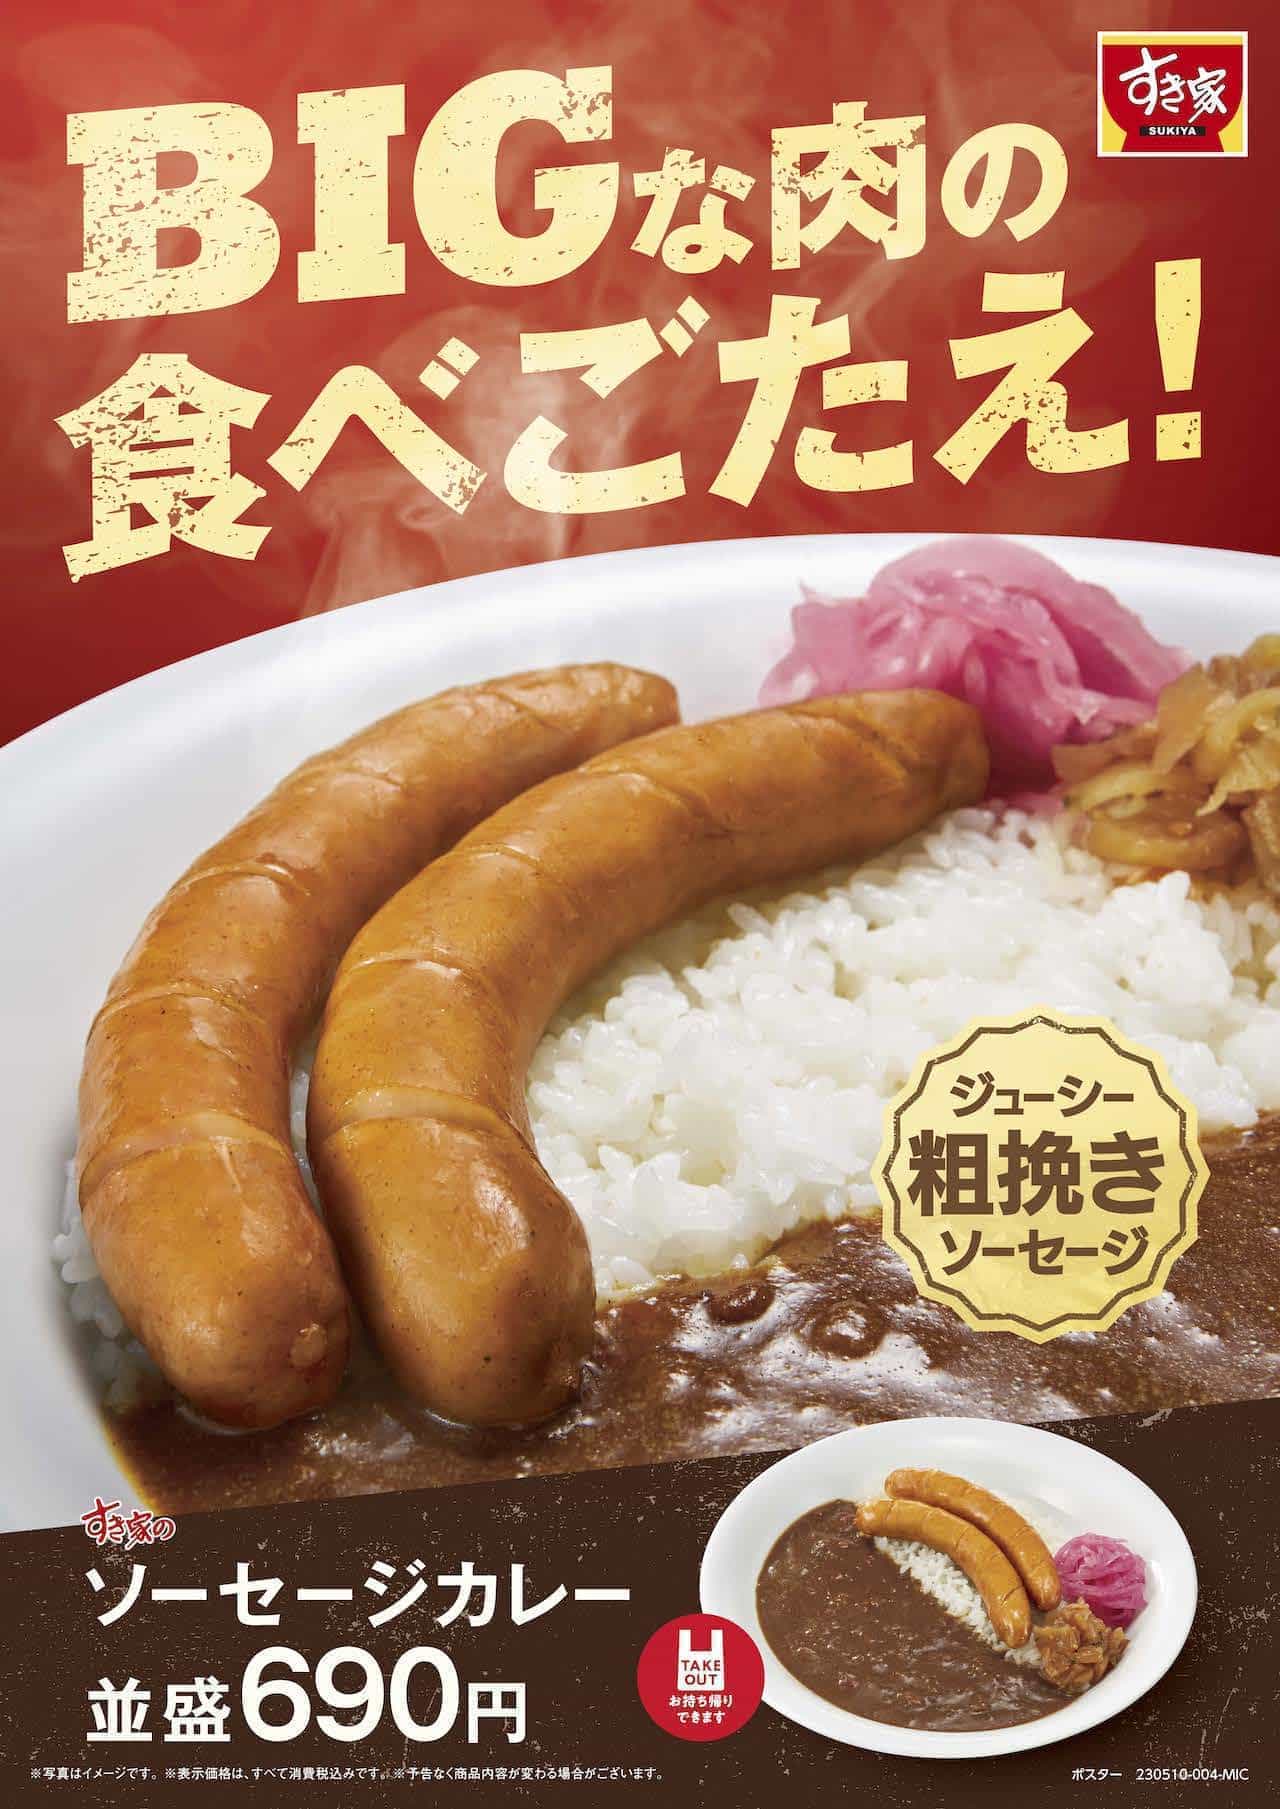 Sukiya "Sausage Curry